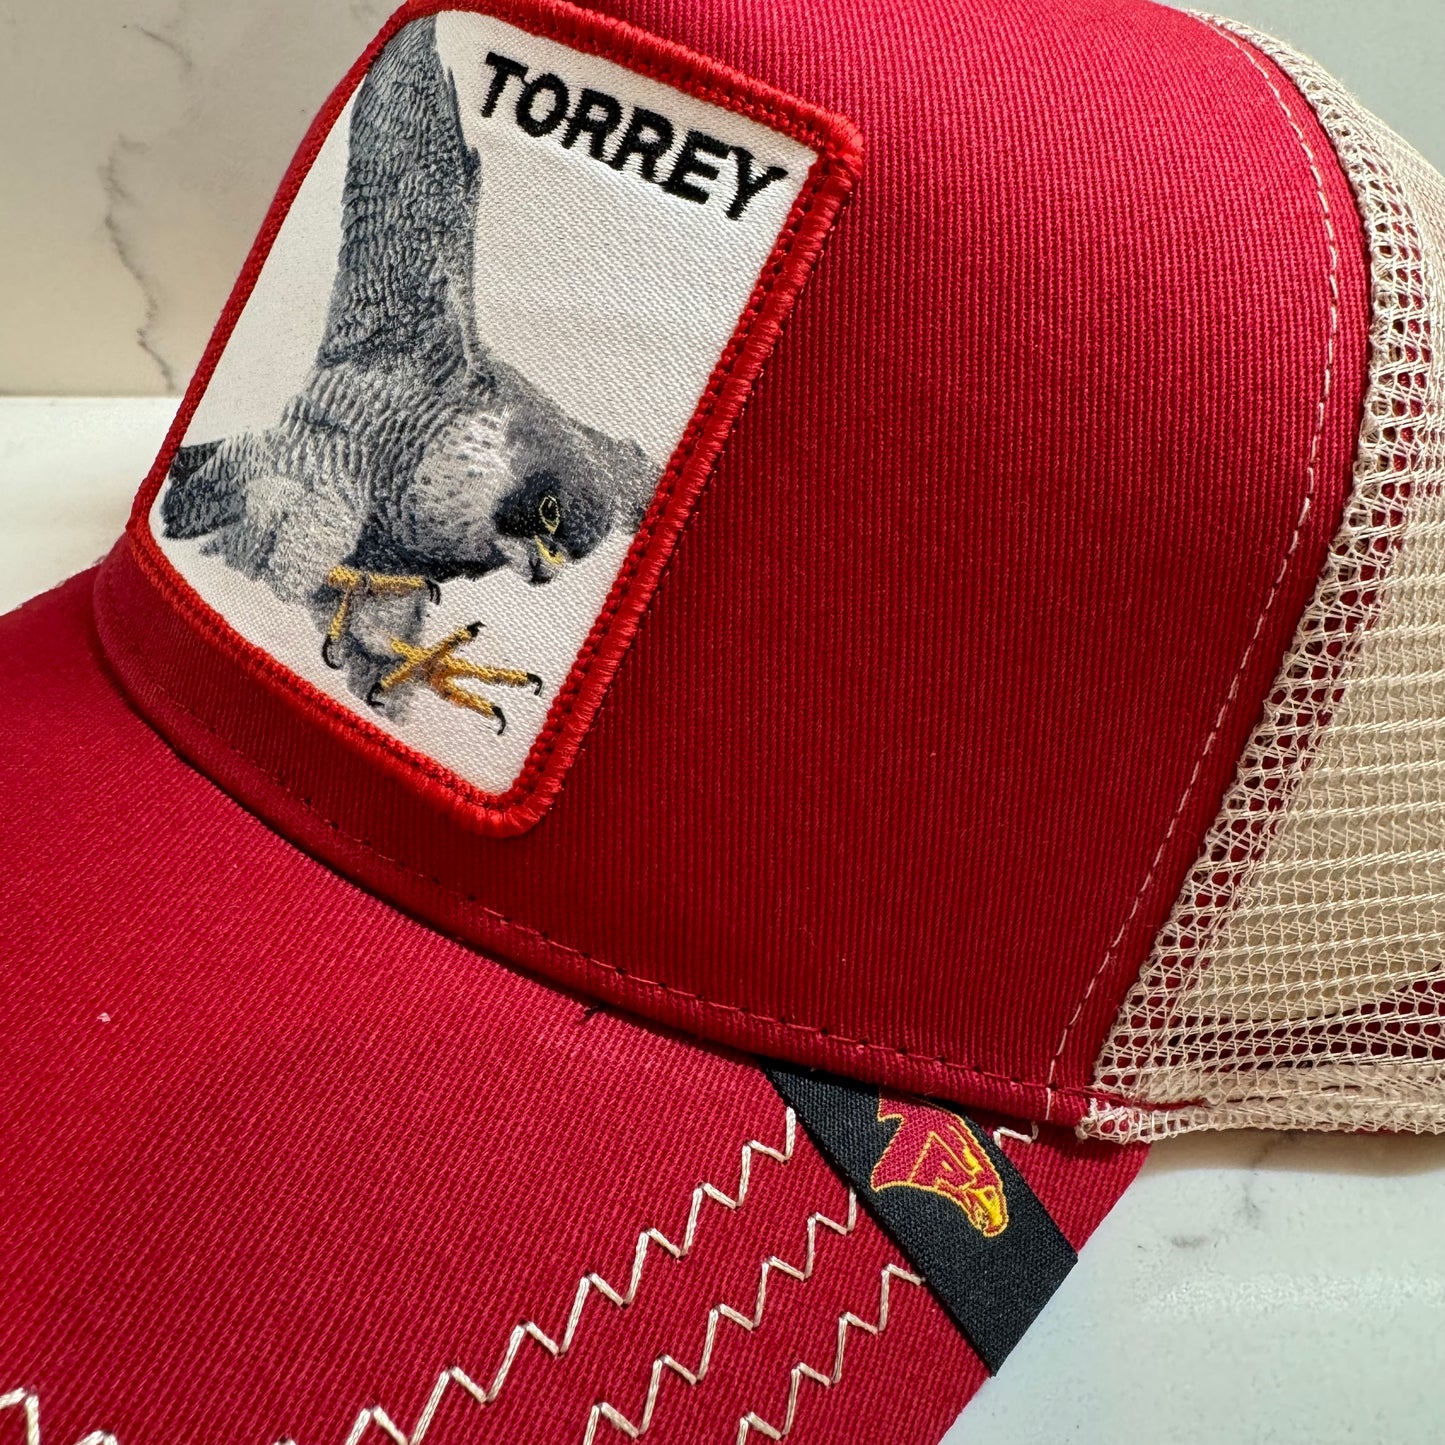 Torrey Pines Falcon Farm Trucker Cap - Red